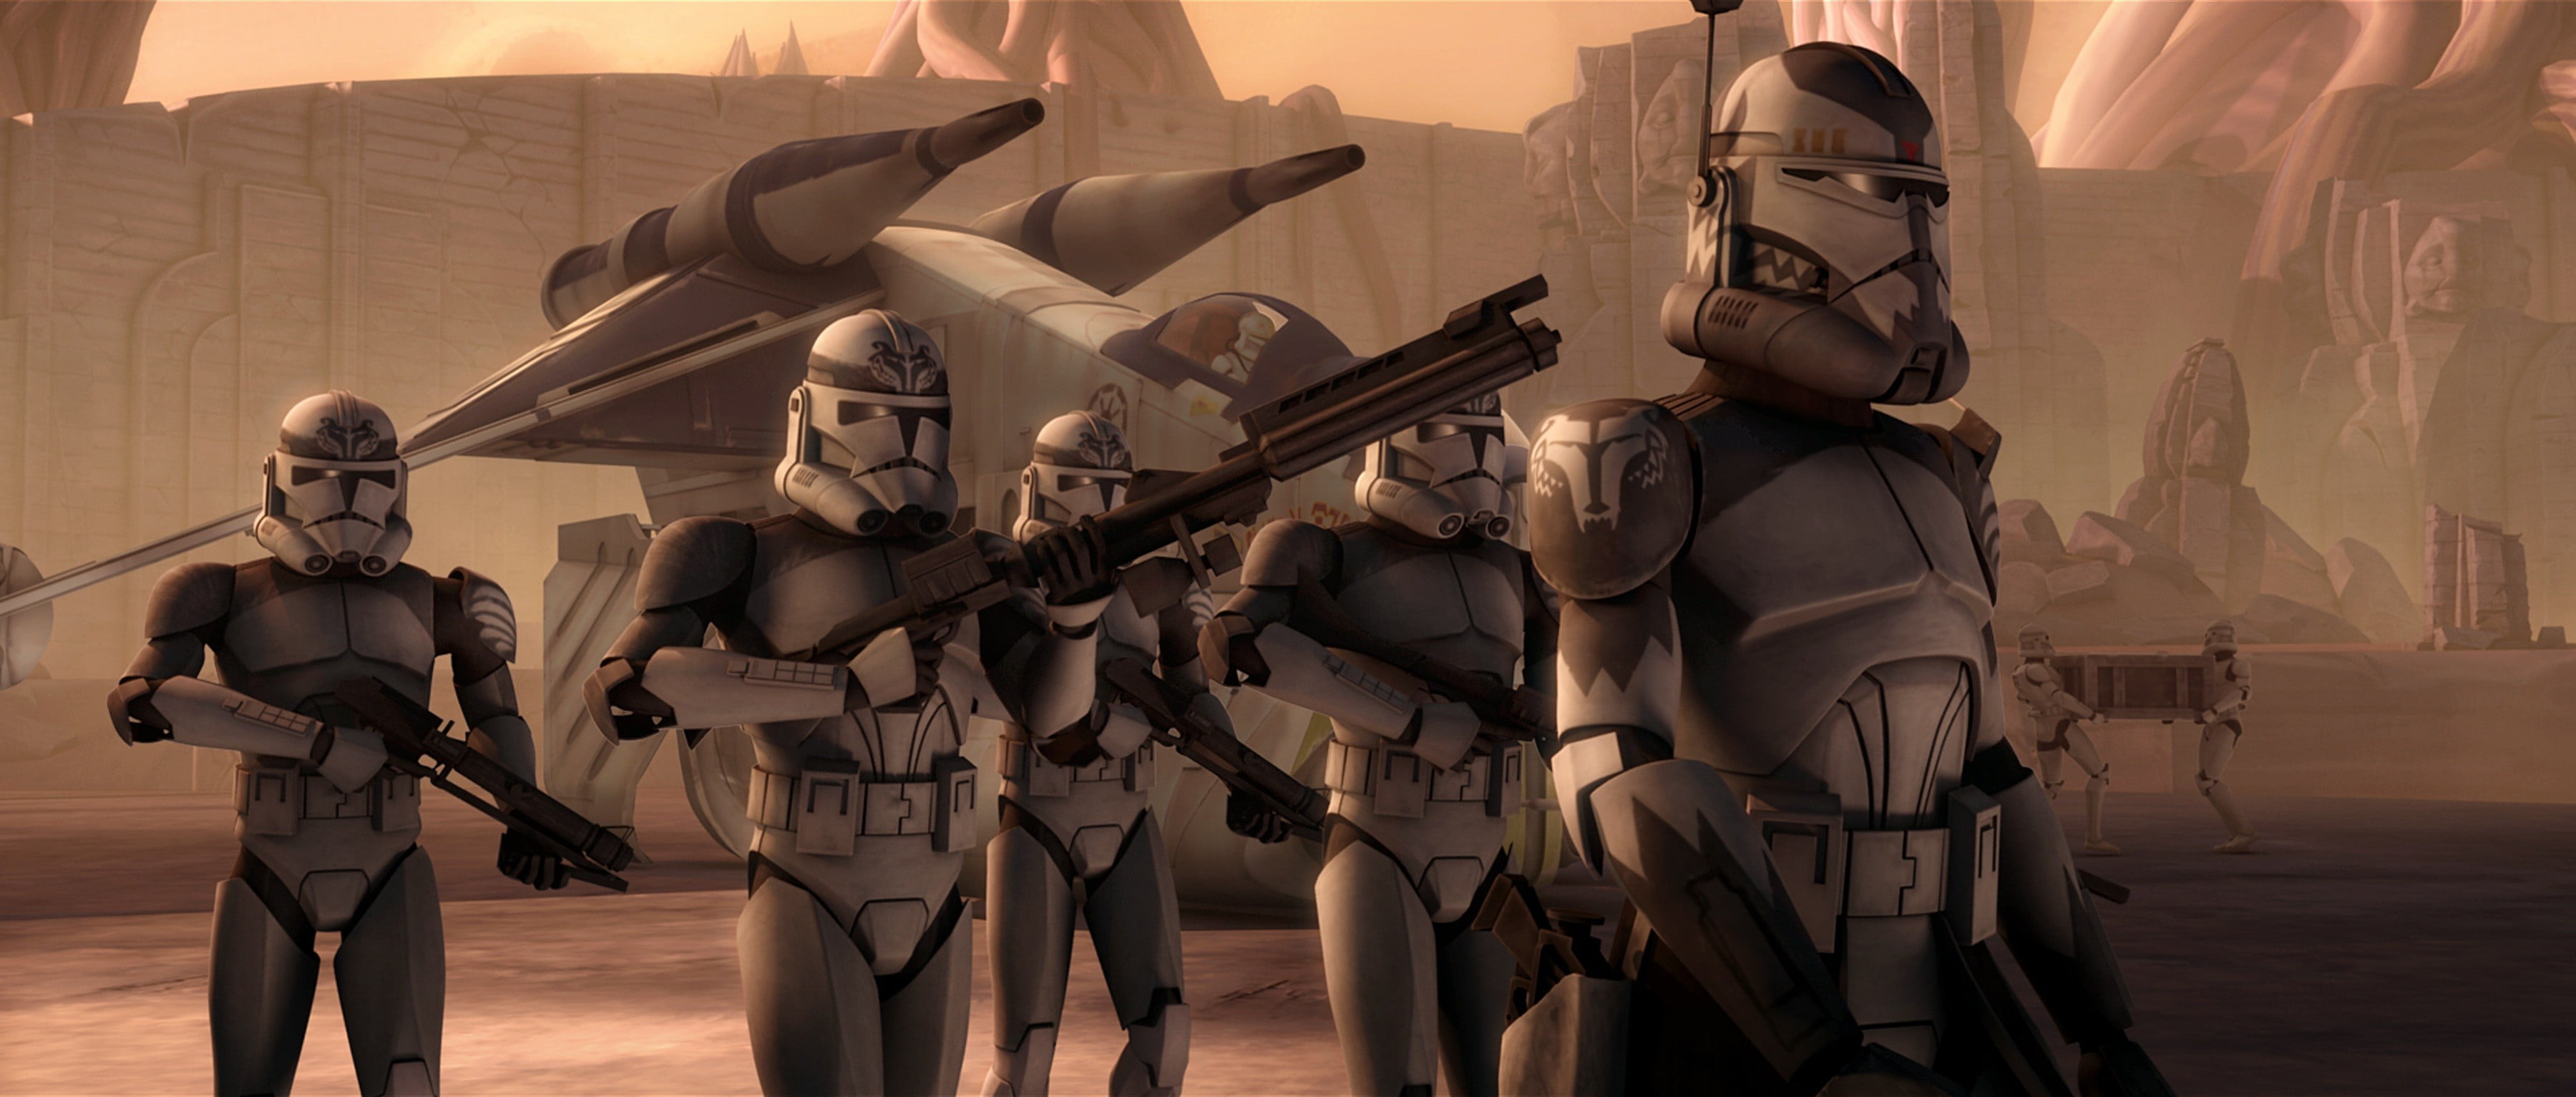 Star Wars Stormtroopers Illustration Star Wars Clone